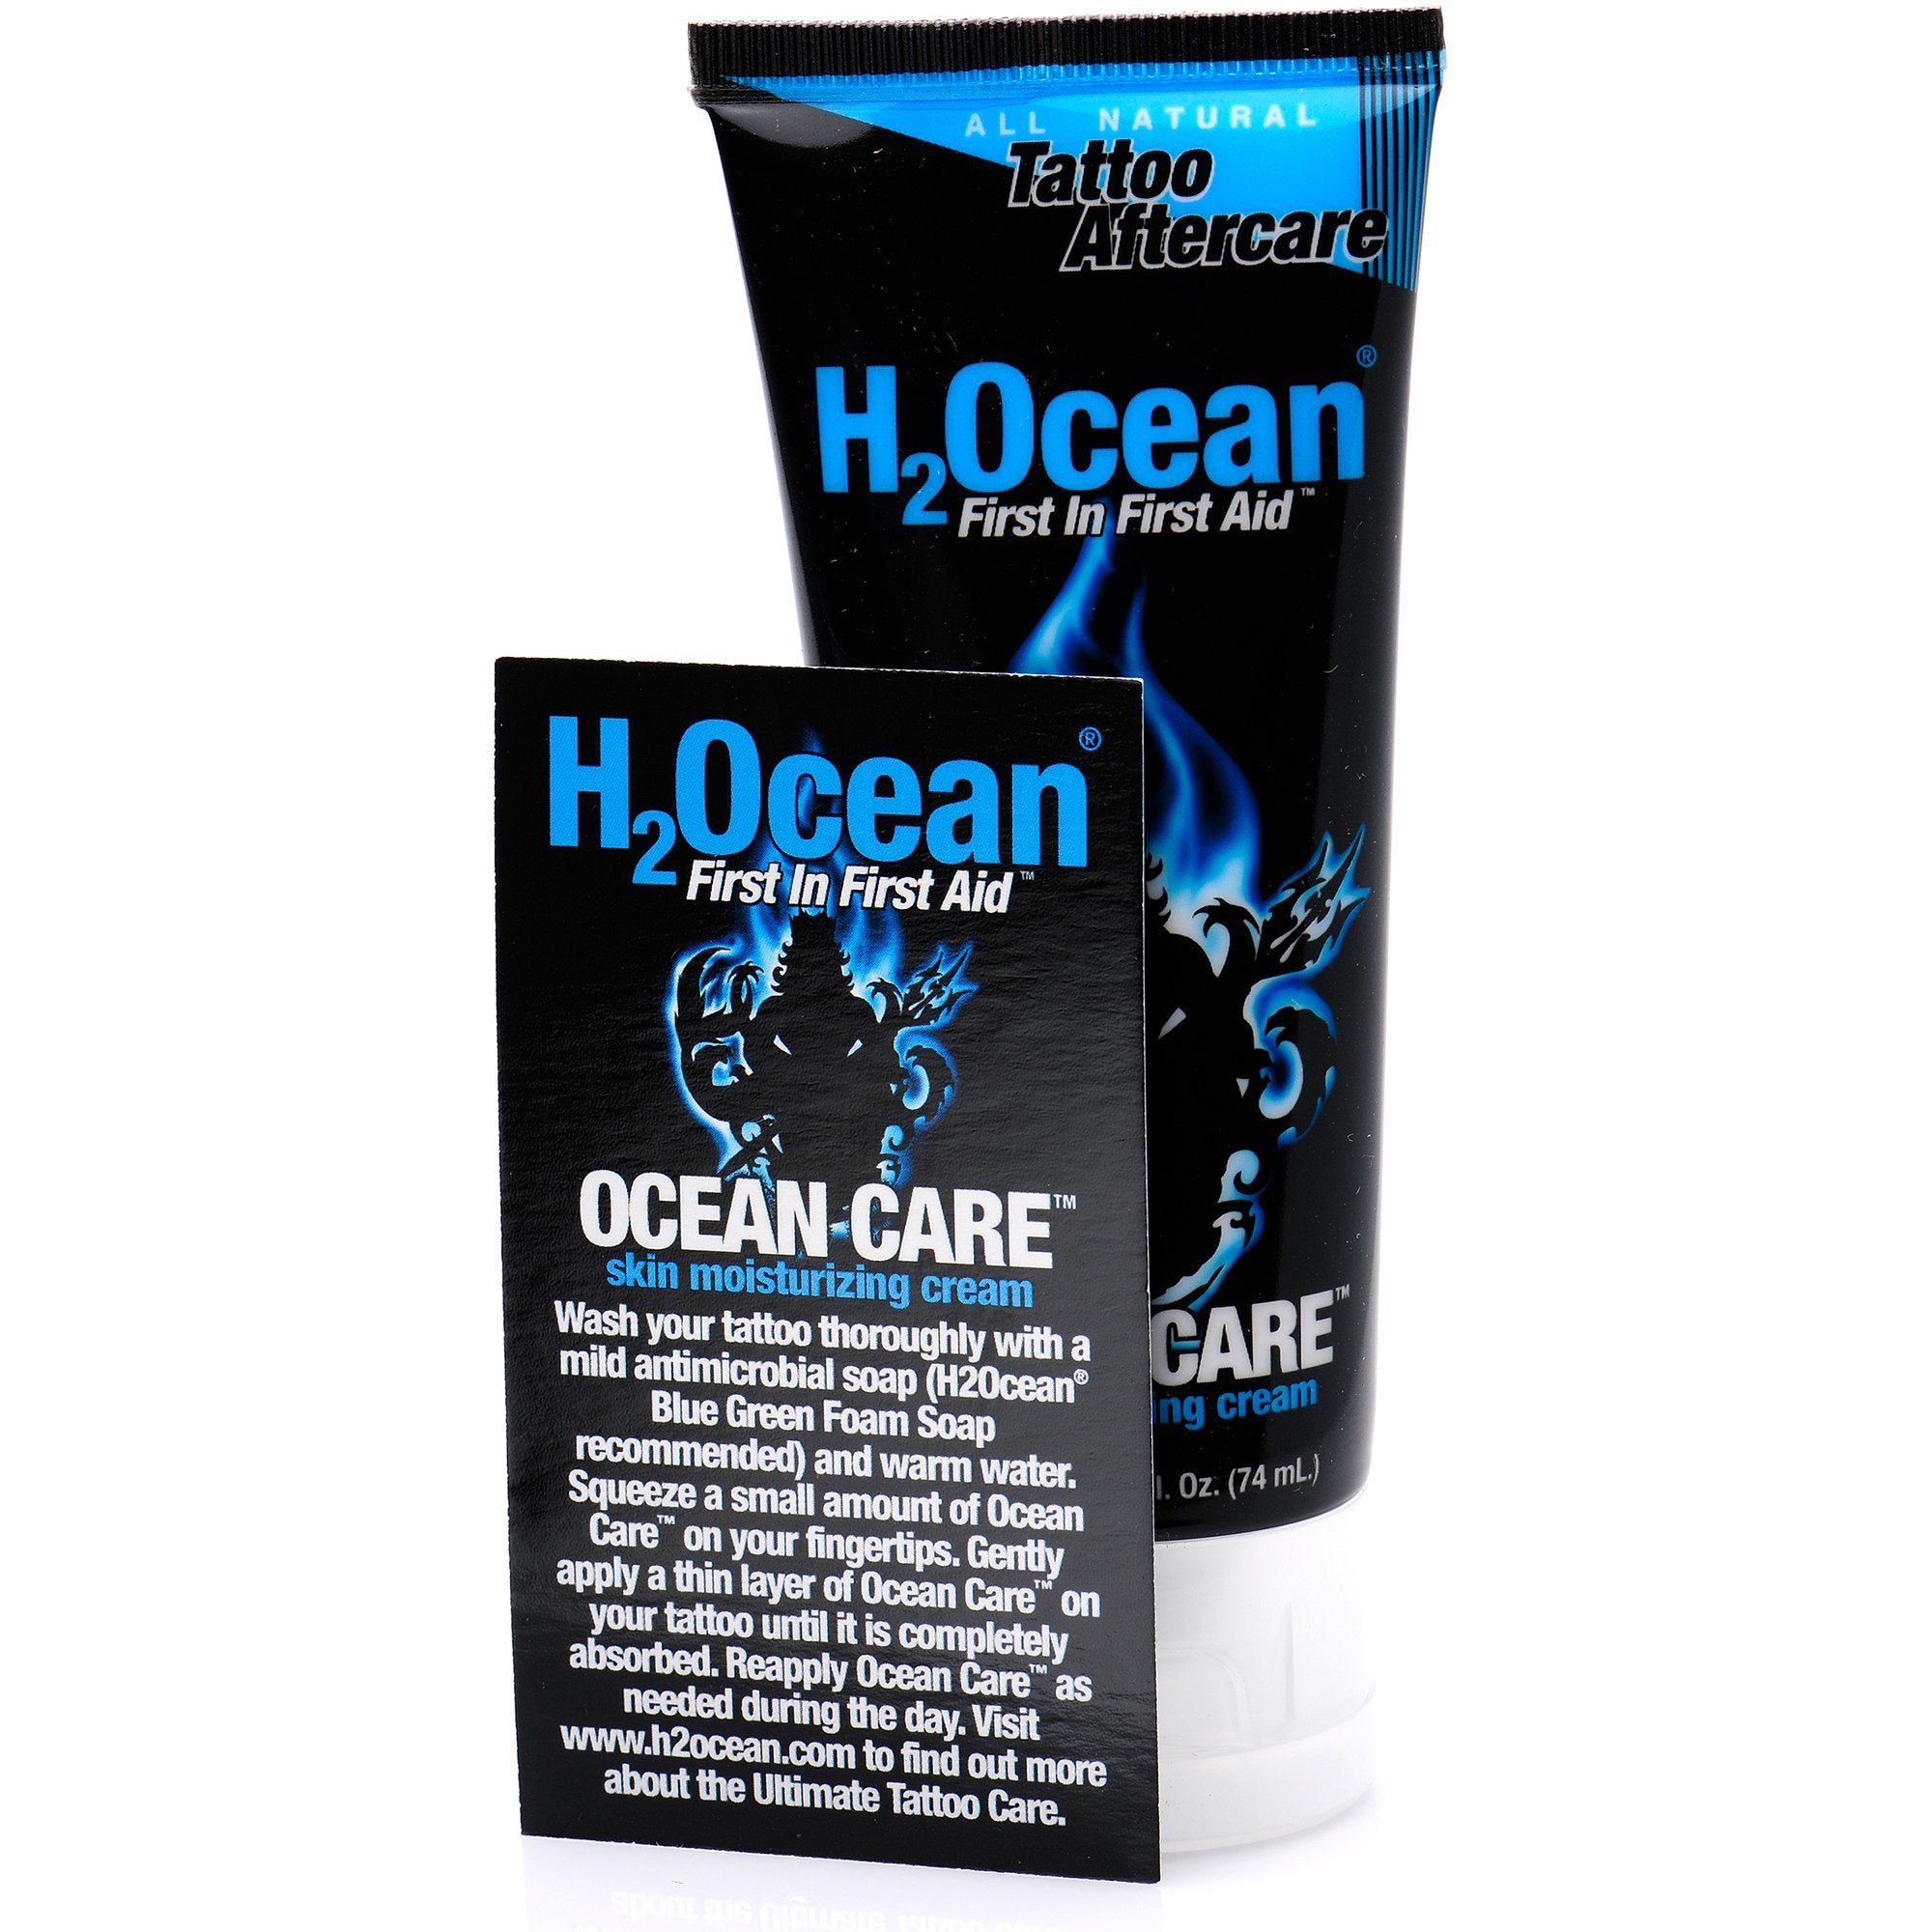 H2Ocean - Tattoo Aftercare Moisturing Cream 2.5oz